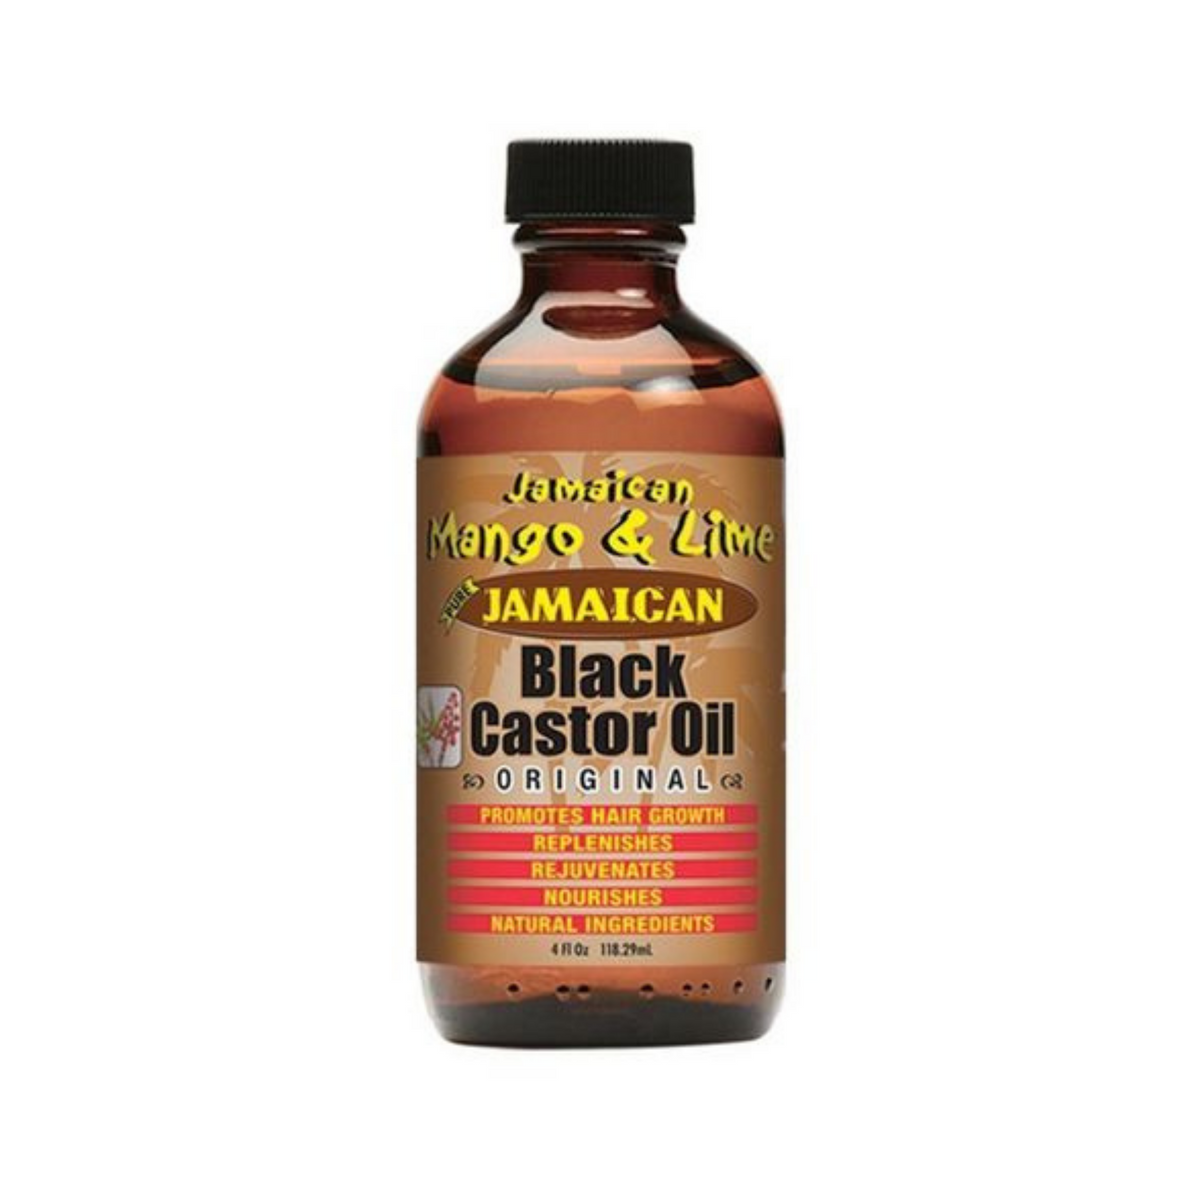 Primary Image of Jamaican Black Castor Oil